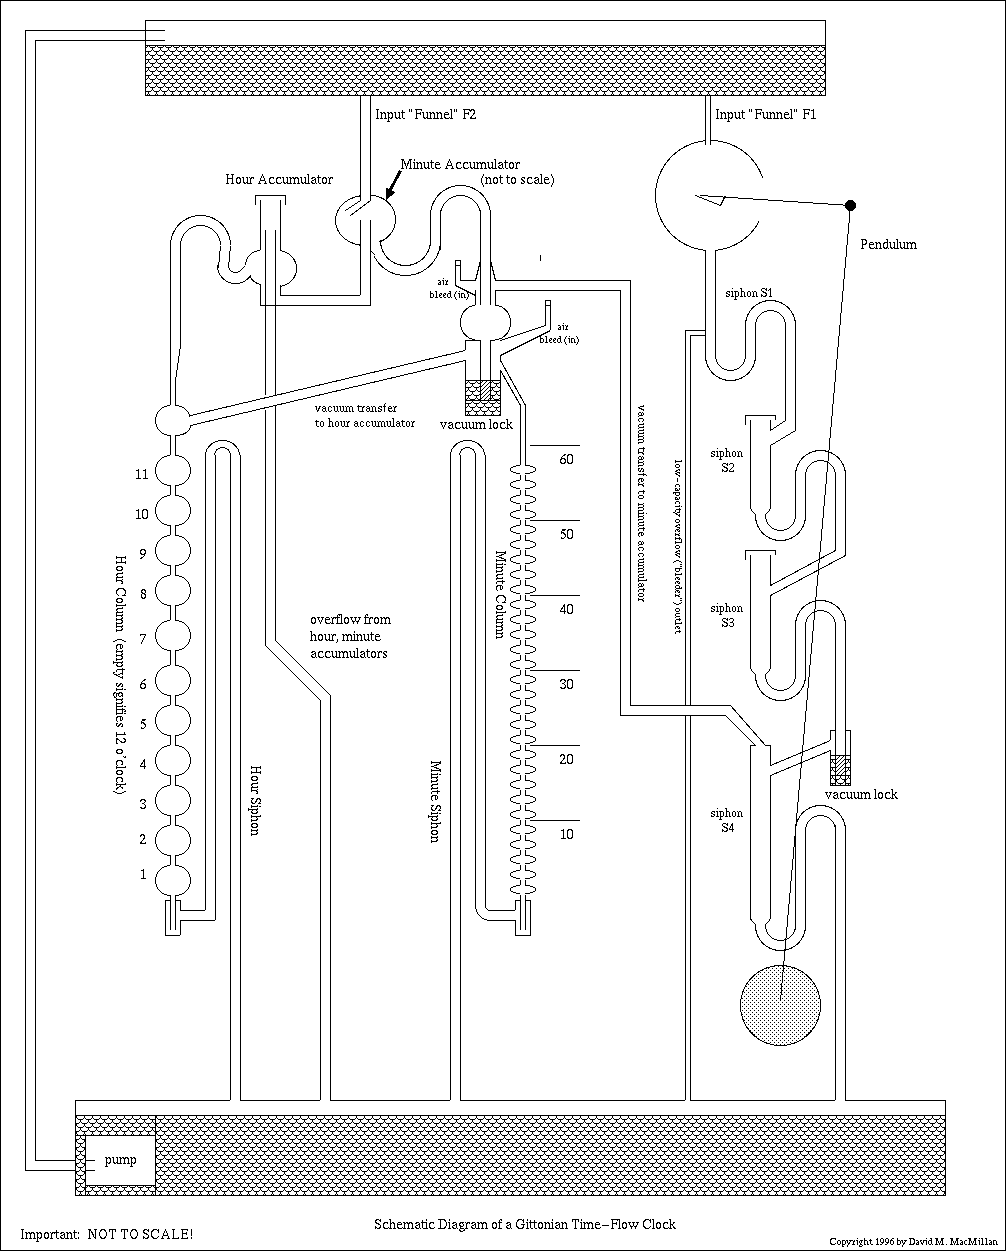 Schematic Diagram of a Gittonian Time-Flow Clock